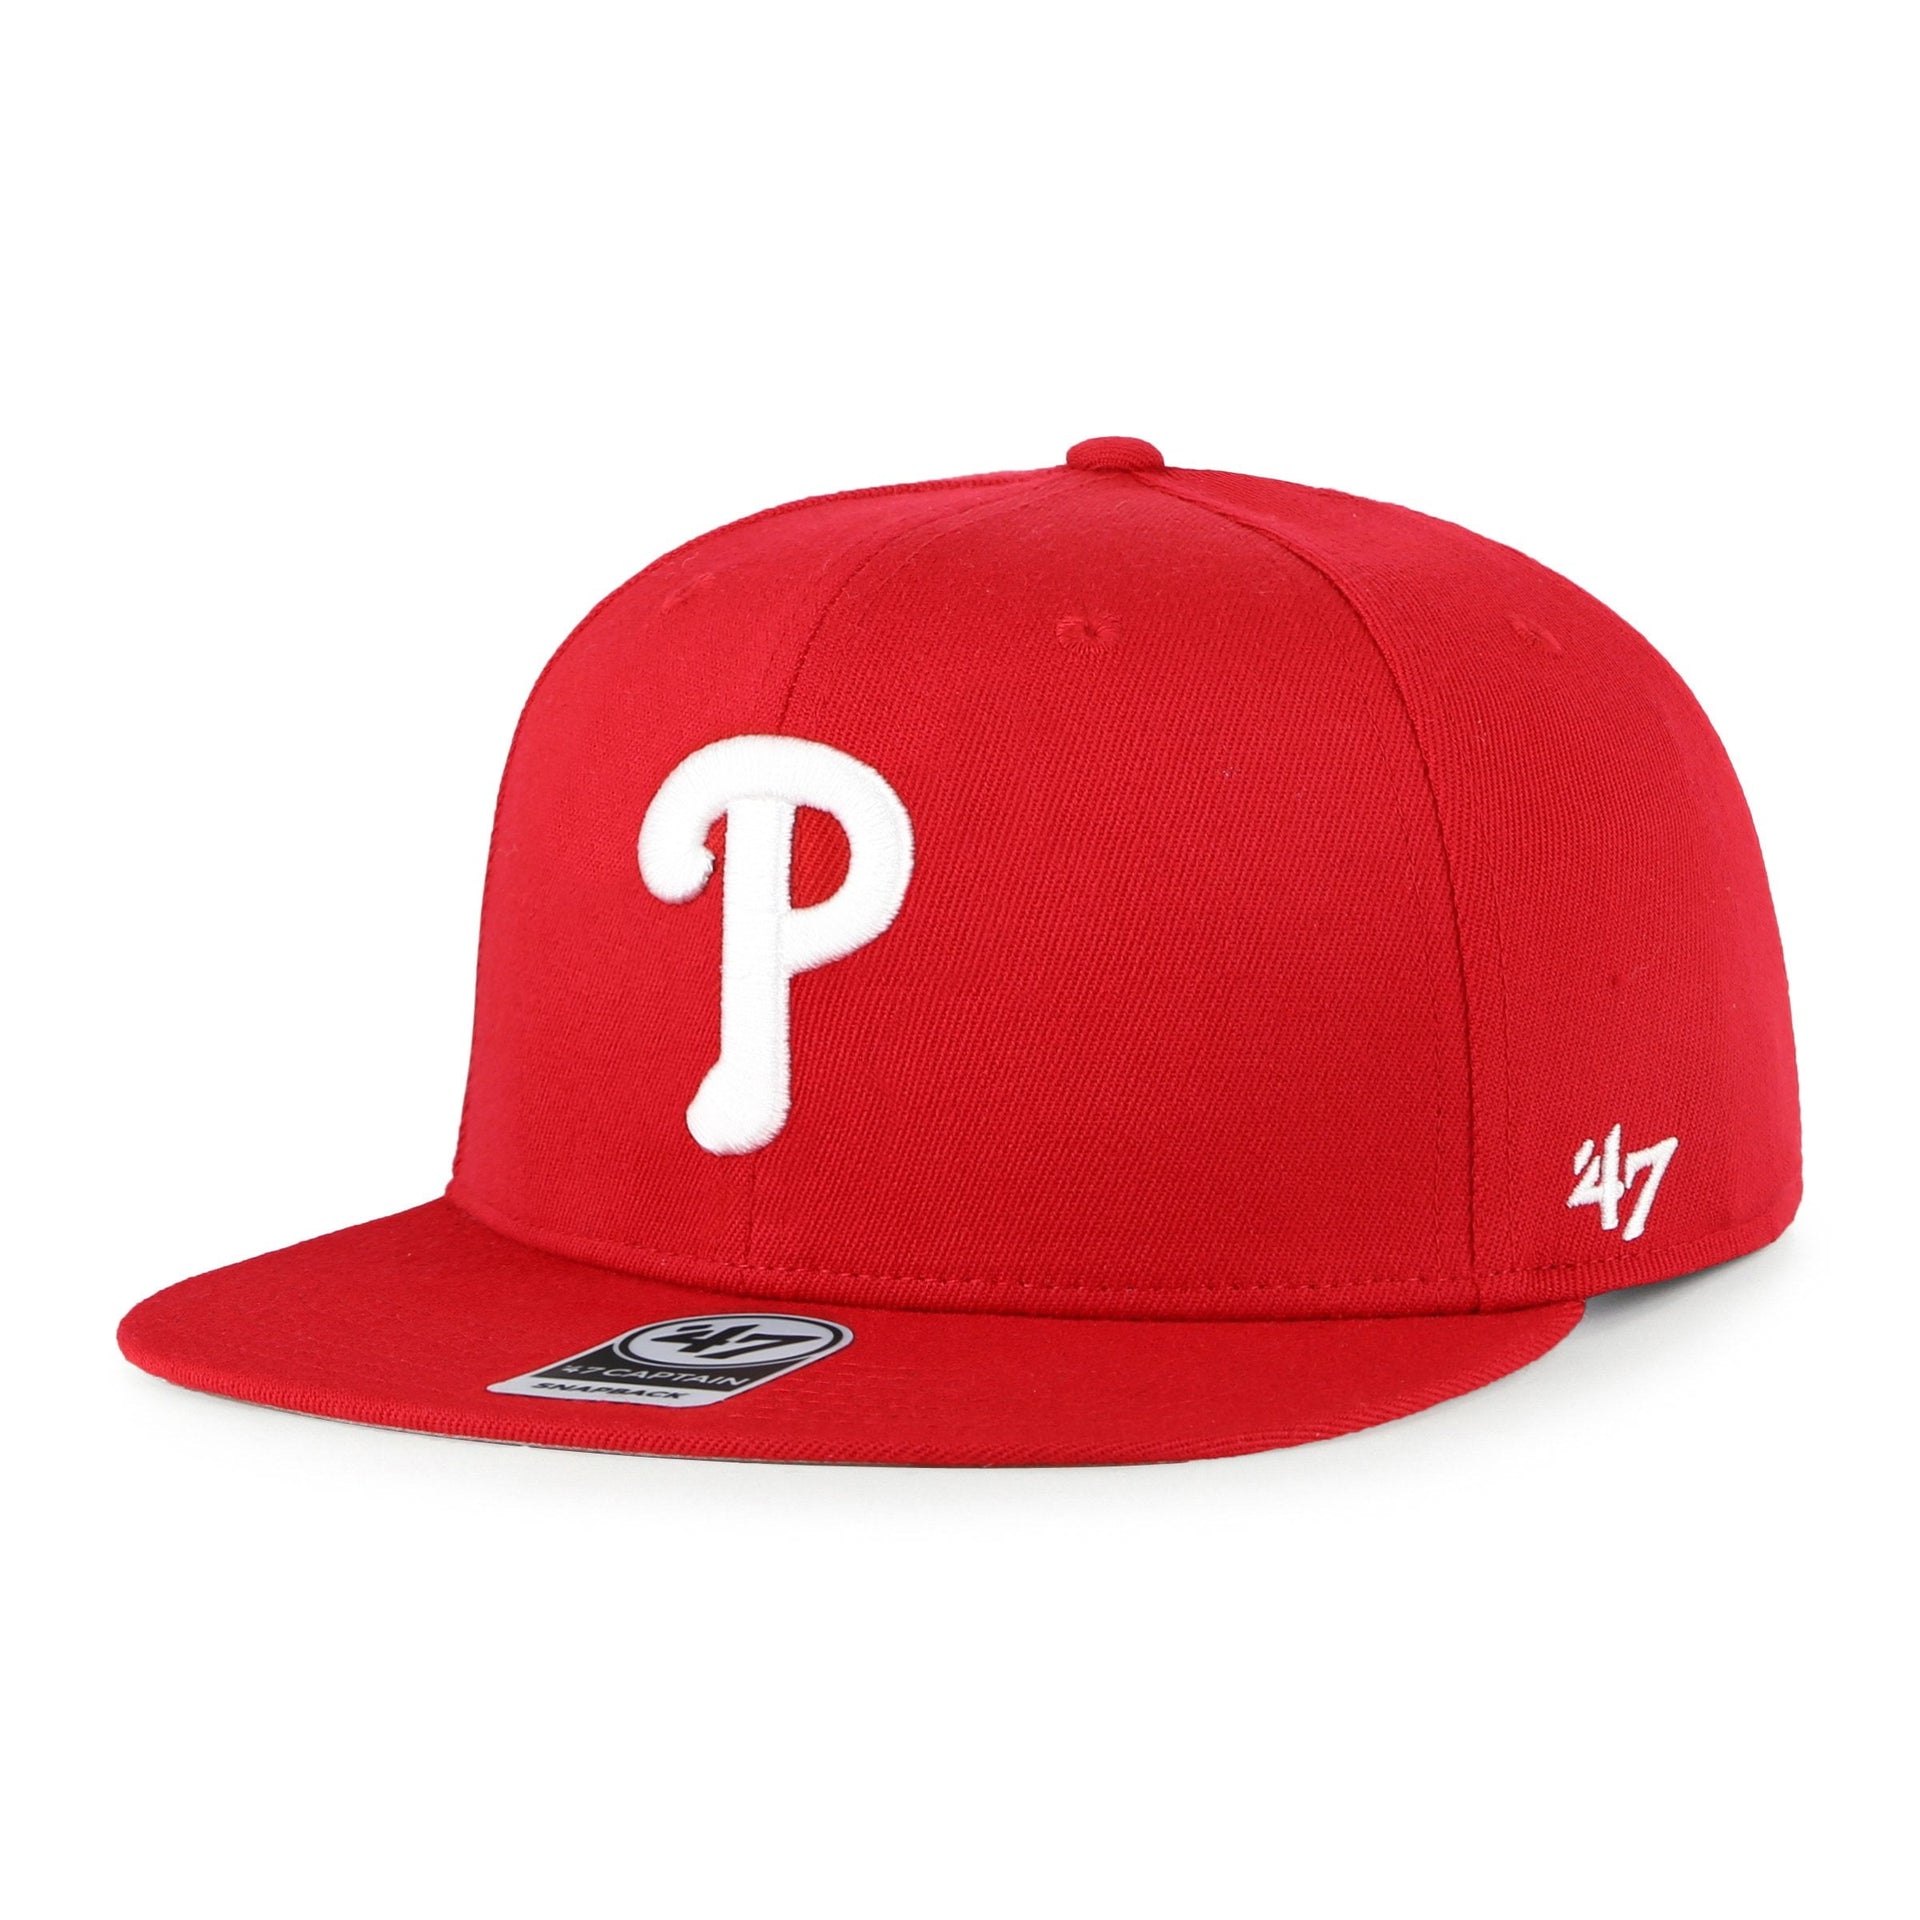 The Philadelphia Phillies Gray Bottom Snapback Cap | Red Snapback Cap